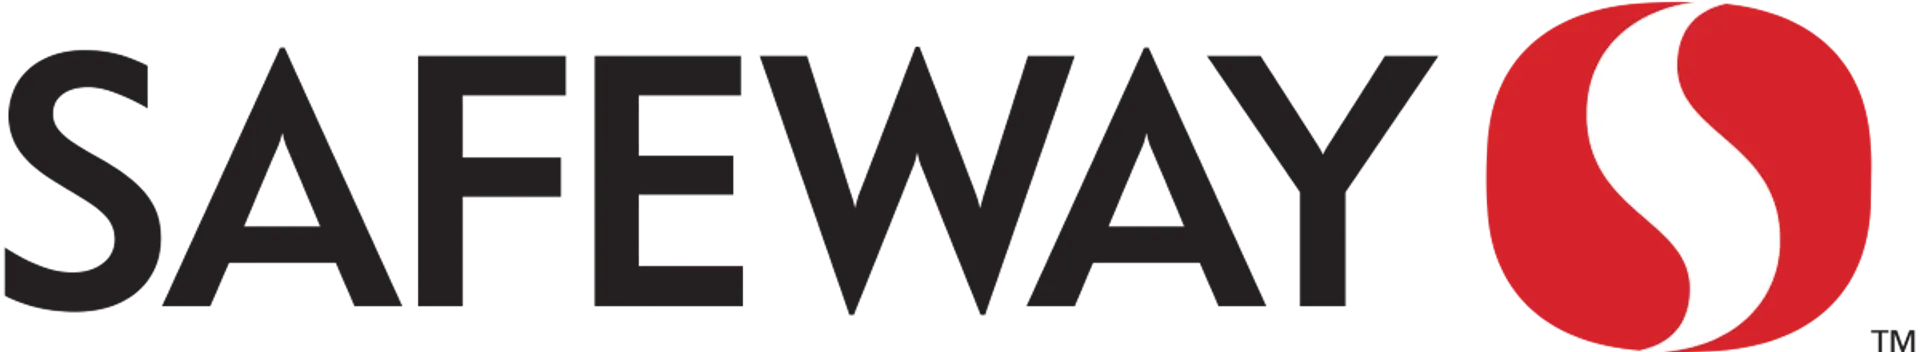 SAFEWAY logo current weekly ad